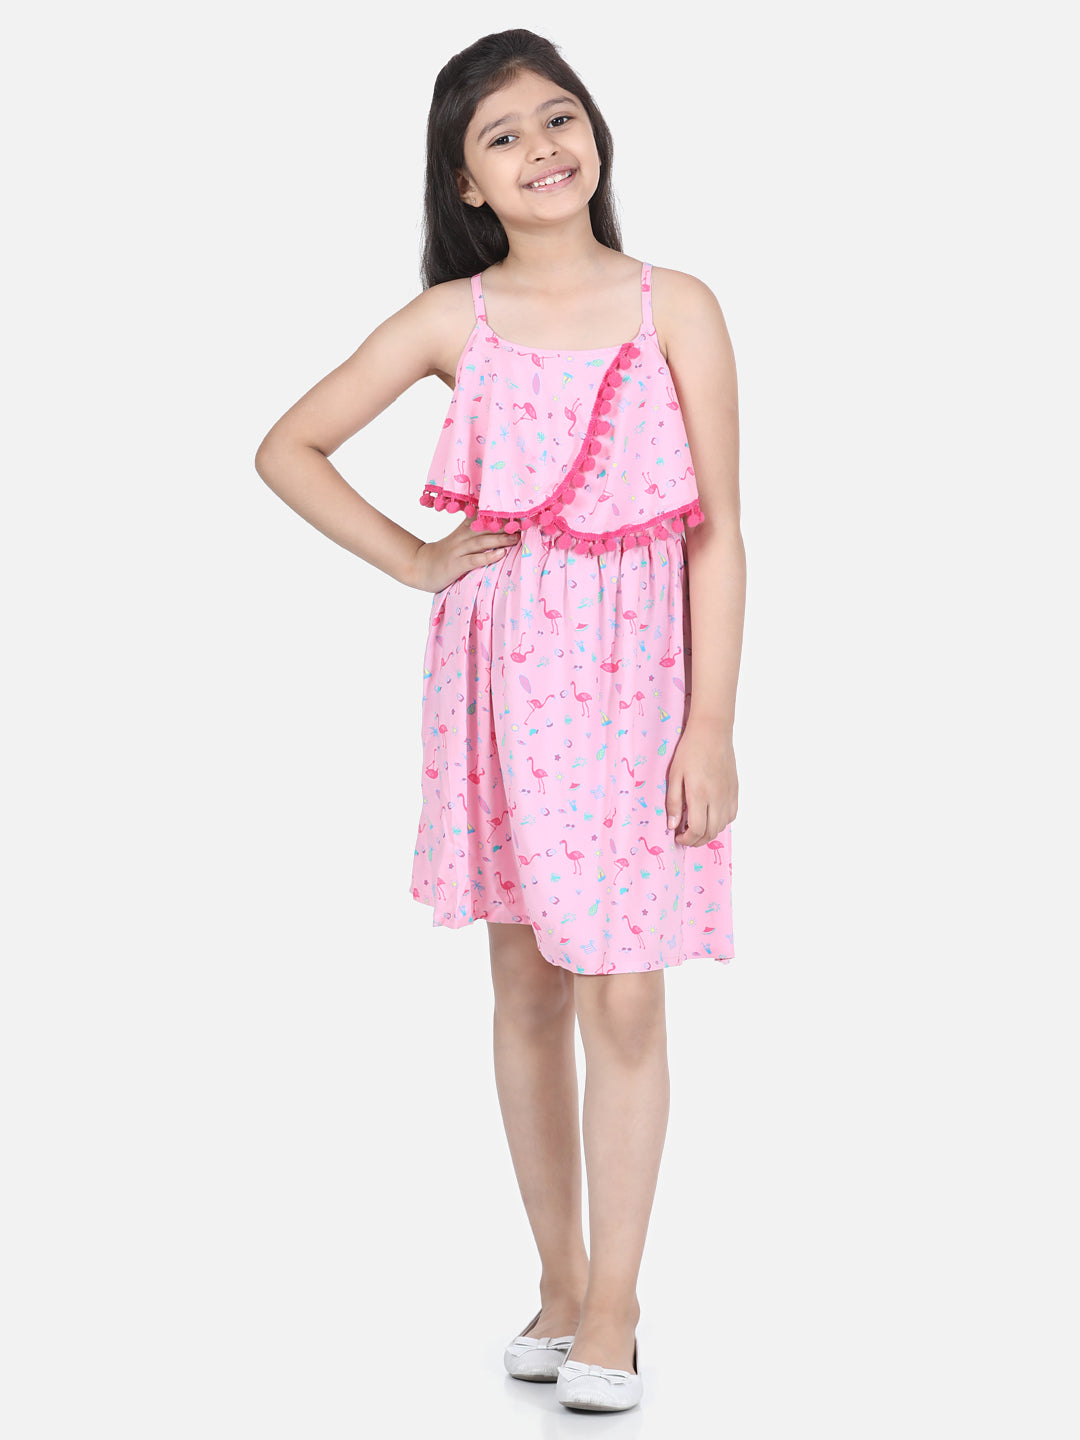 Girls Pink Flamingo Printed Dress with Pom Pom Details